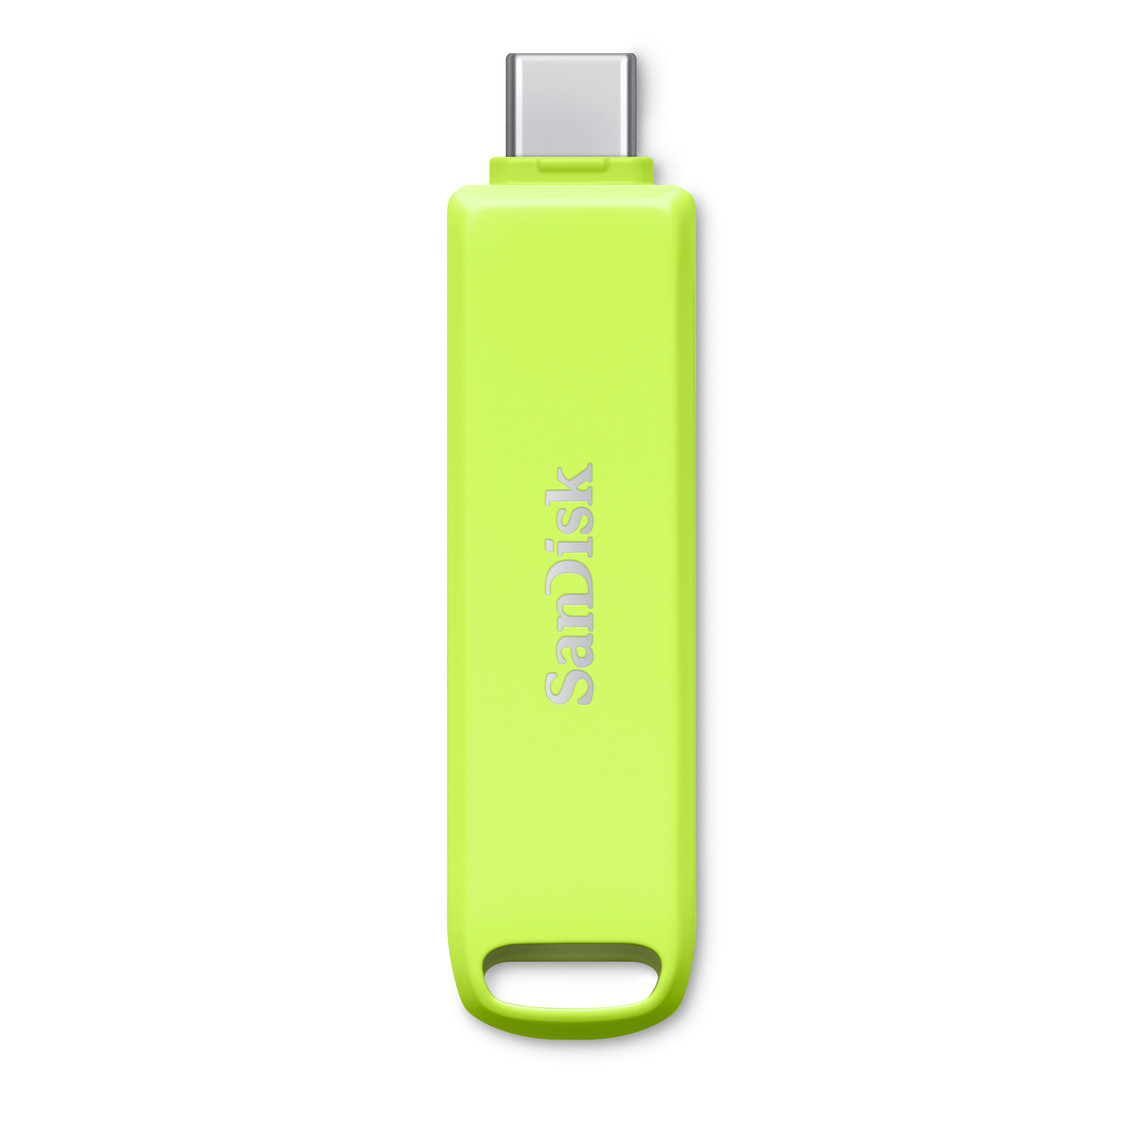 SanDisk® iXpand® Luxe 快閃儲存，綠色，頂端是 USB-C 接頭，中間有 SanDisk 標誌，底部配備鎖匙扣孔